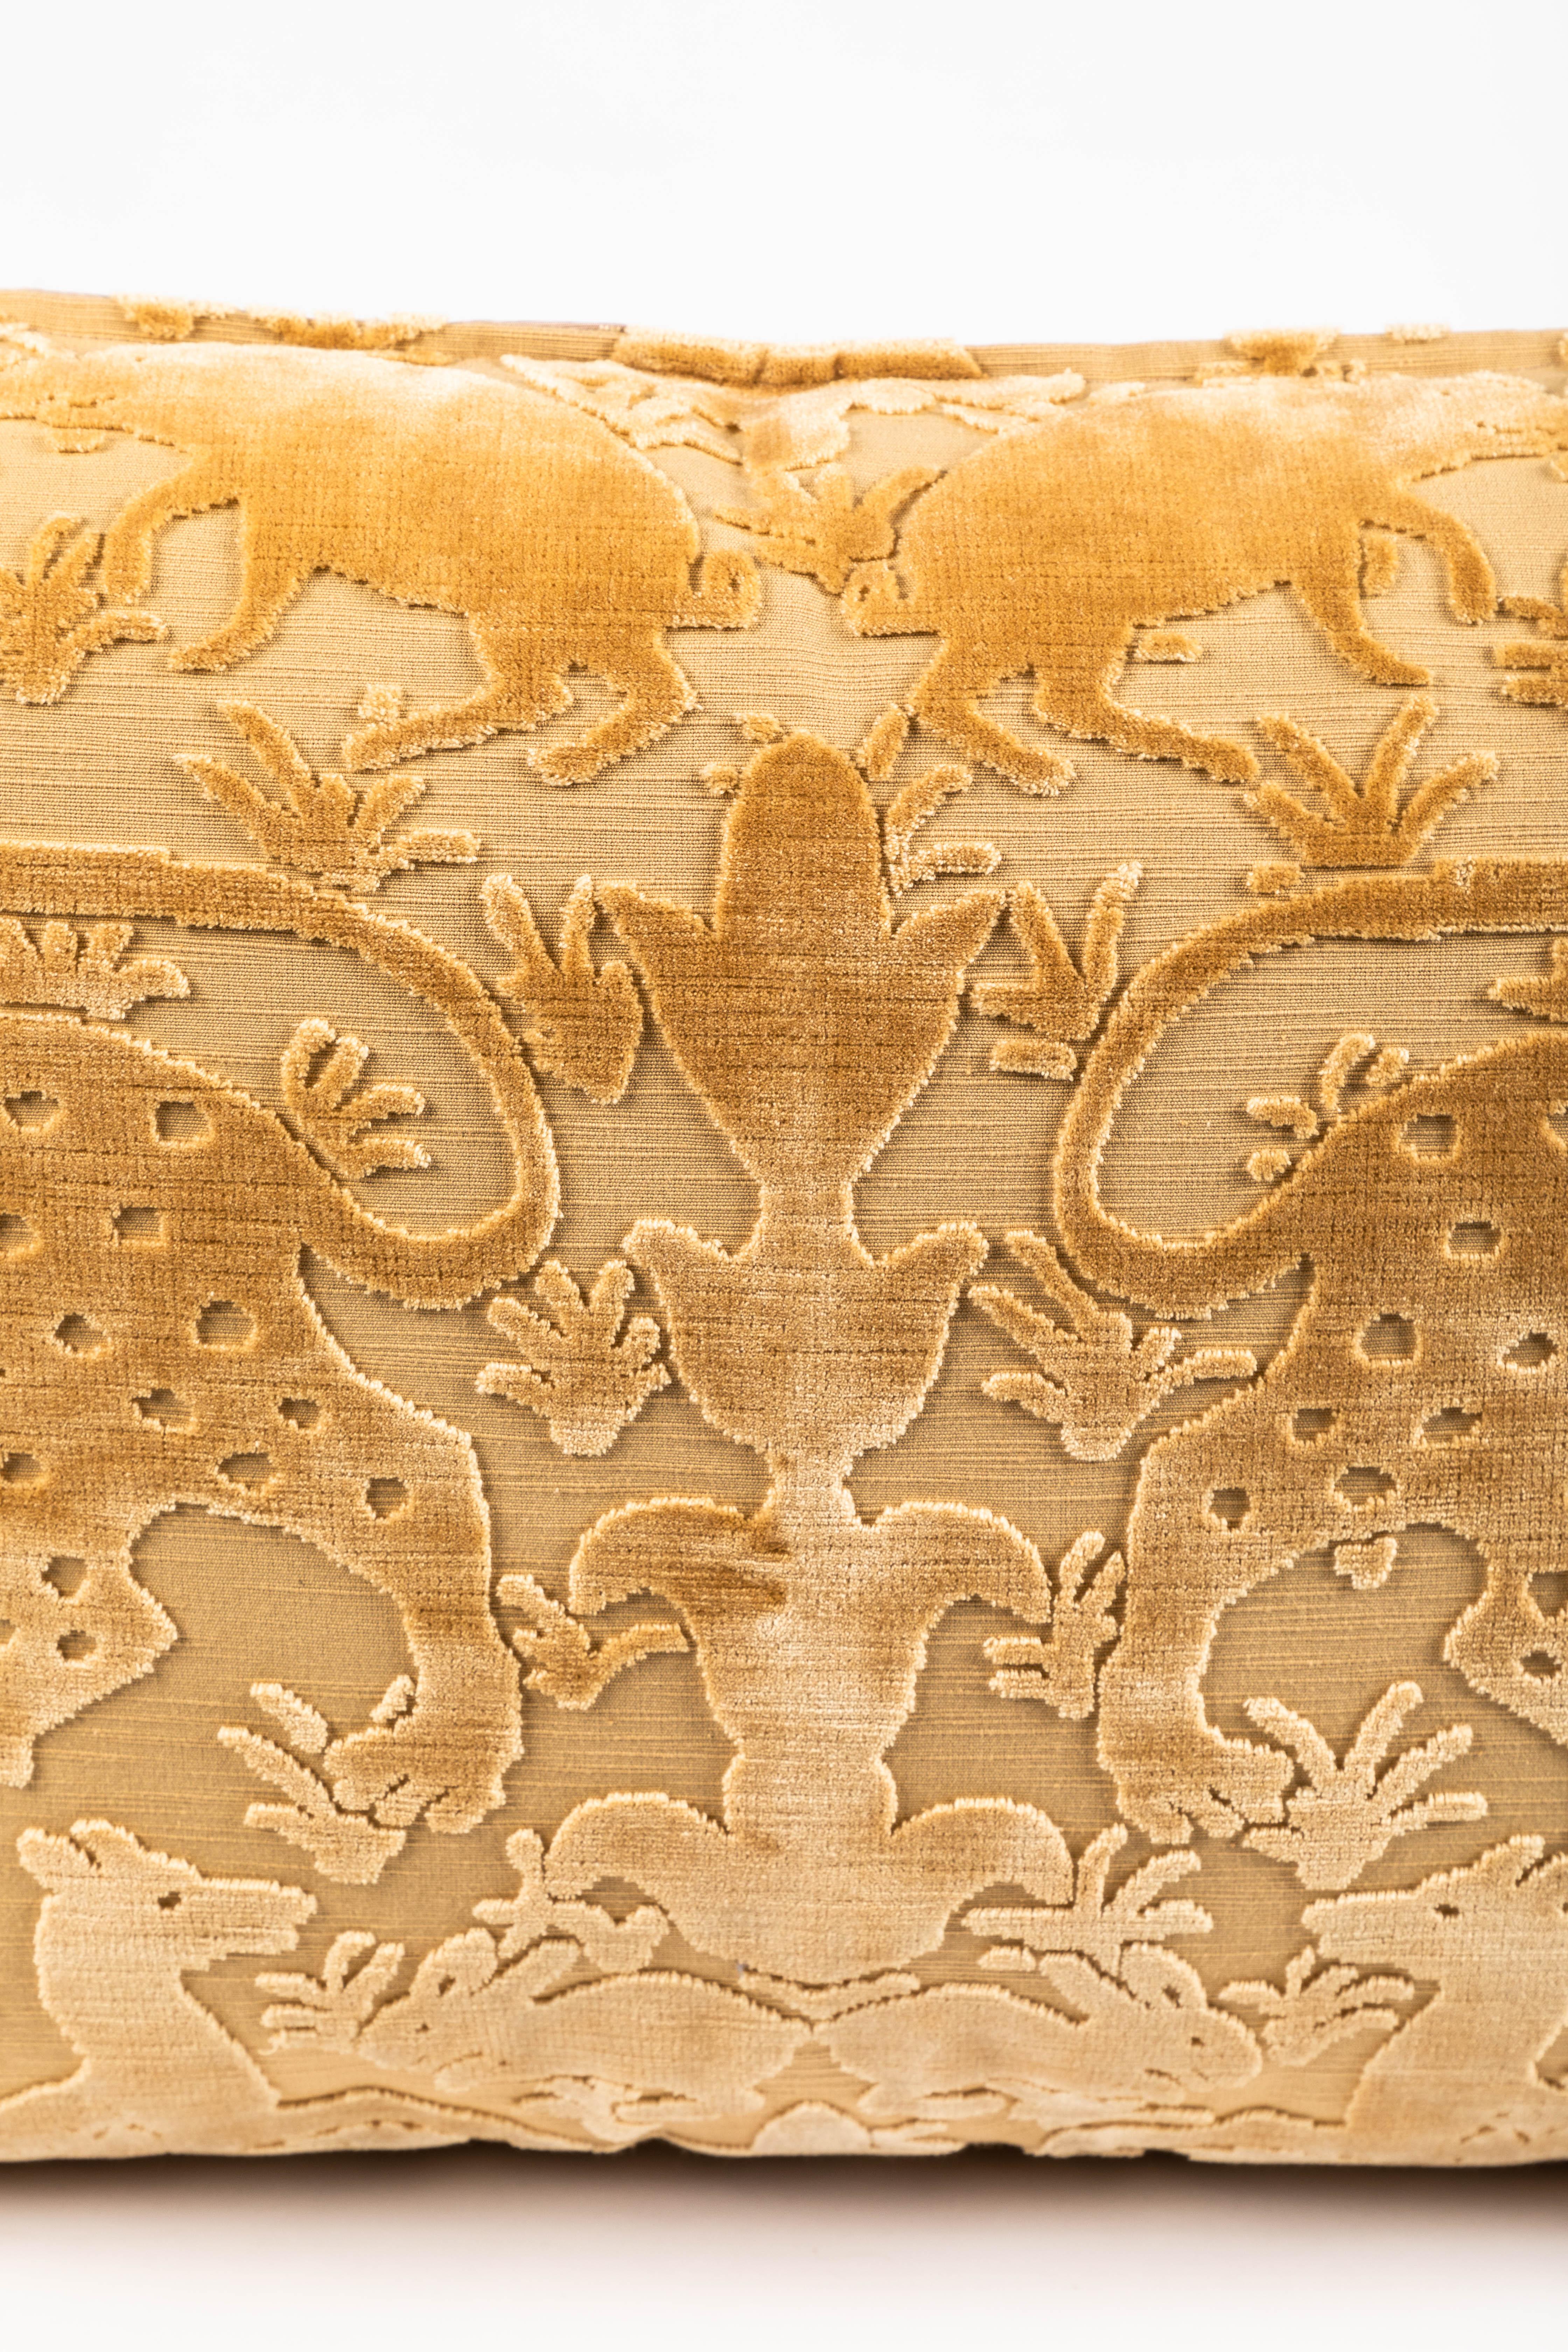 Bevilacqua Animal Motif 'Bestiario' Handcut Gold Velvet Pillow In Good Condition In Chicago, IL